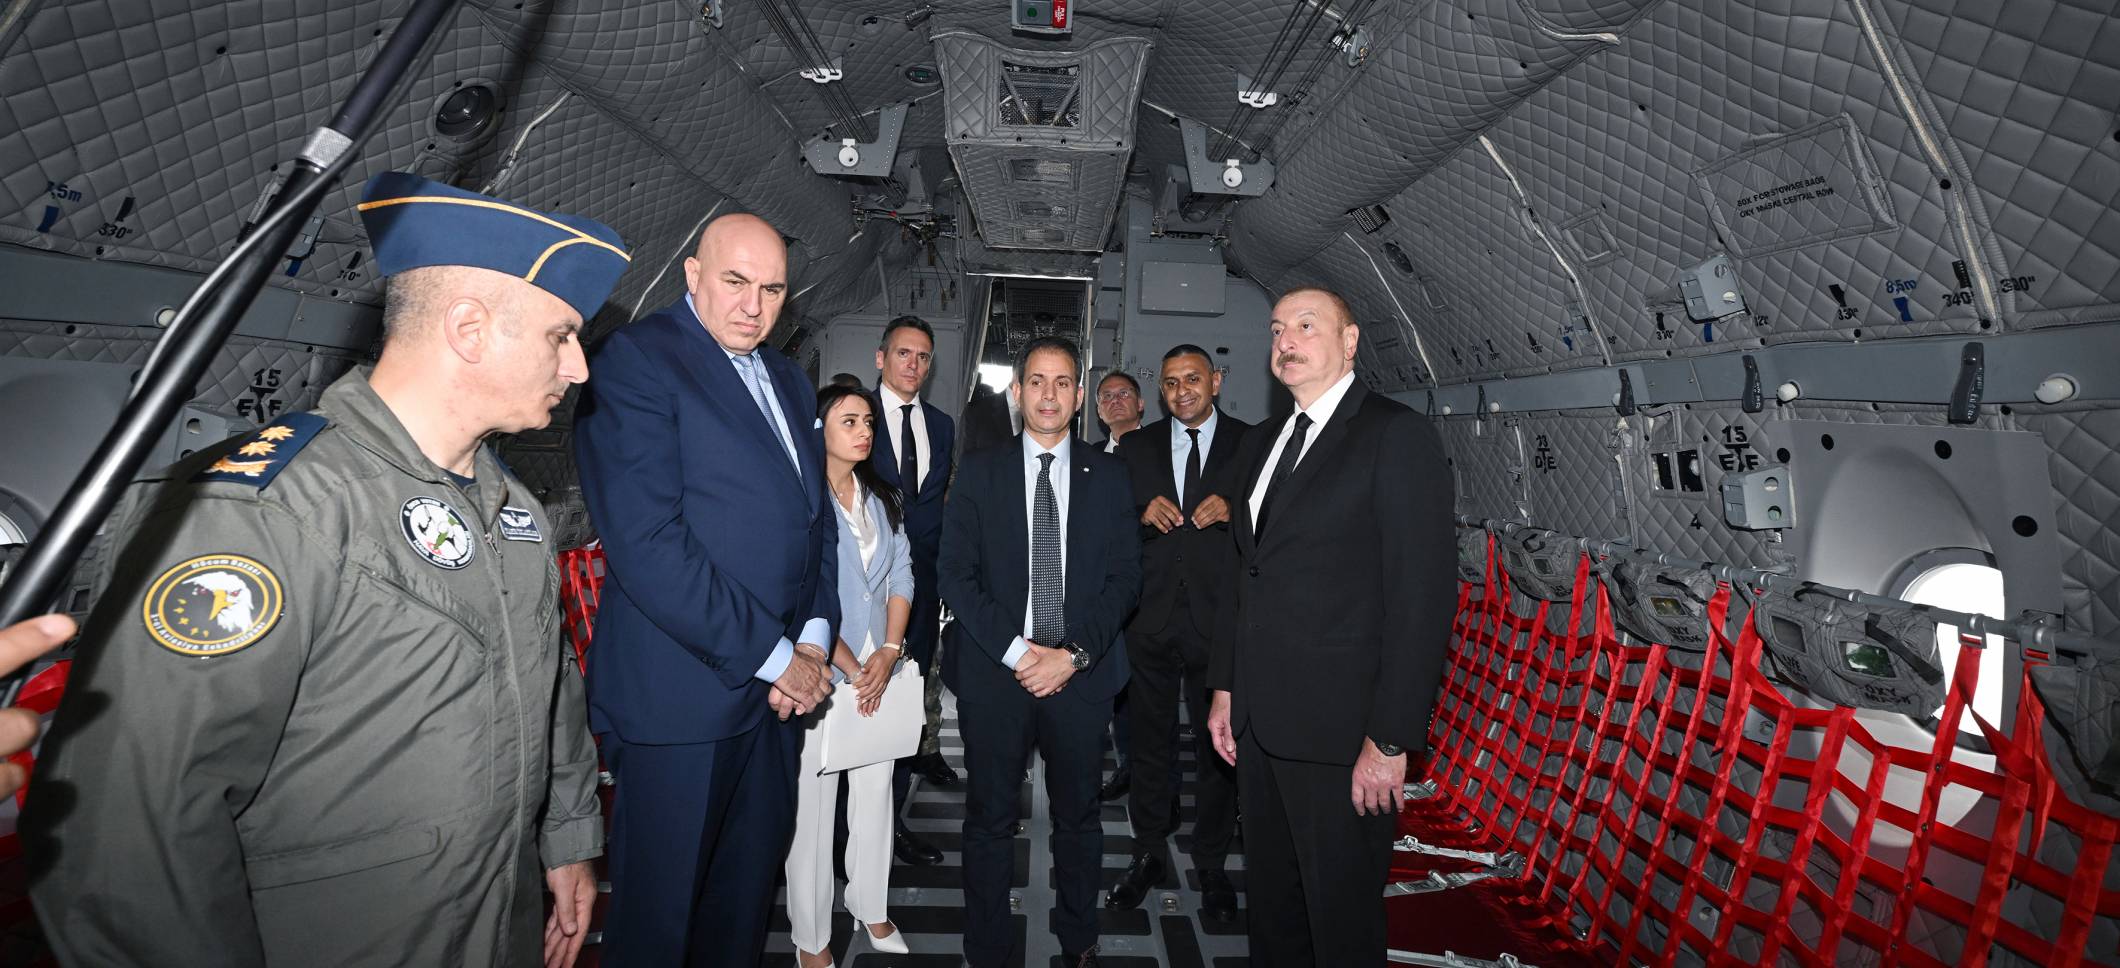 Ilham Aliyev was presented with military transport aircraft produced by Italian "Leonardo" company